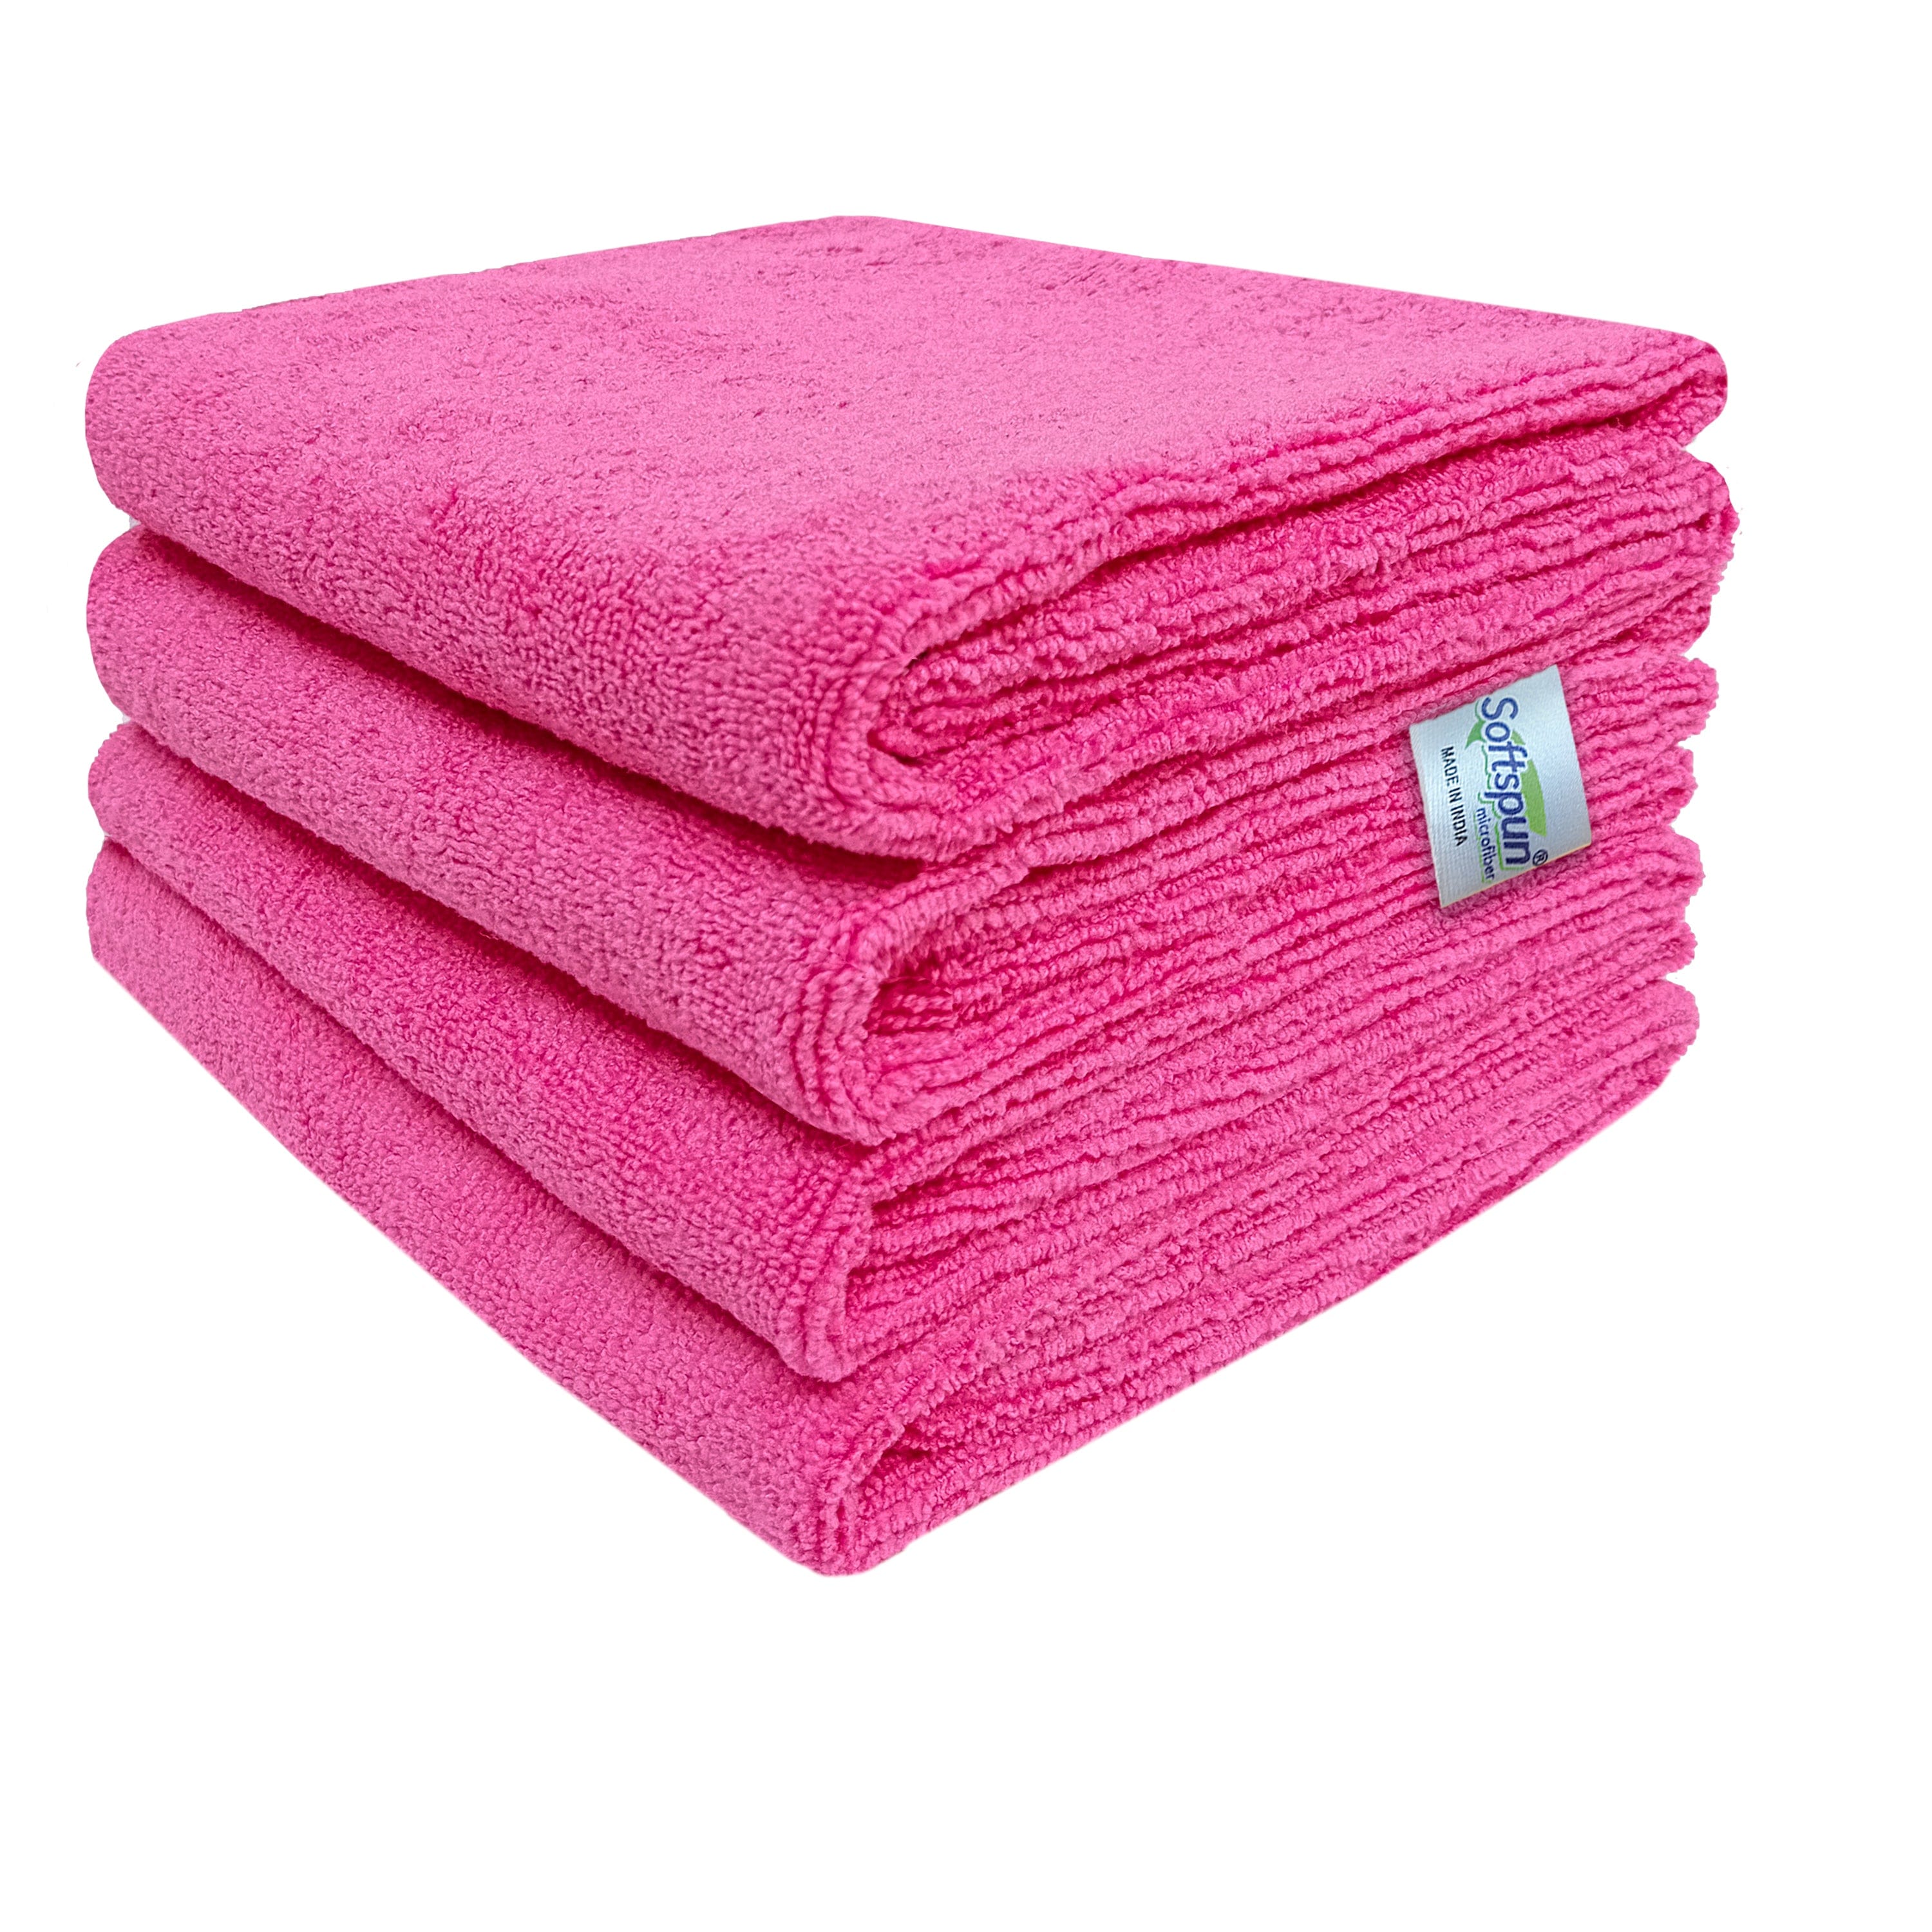 SOFTSPUN Microfiber Towel Pink - 340 GSM Thick 100int & Streak-Free Multipurpose Cloth